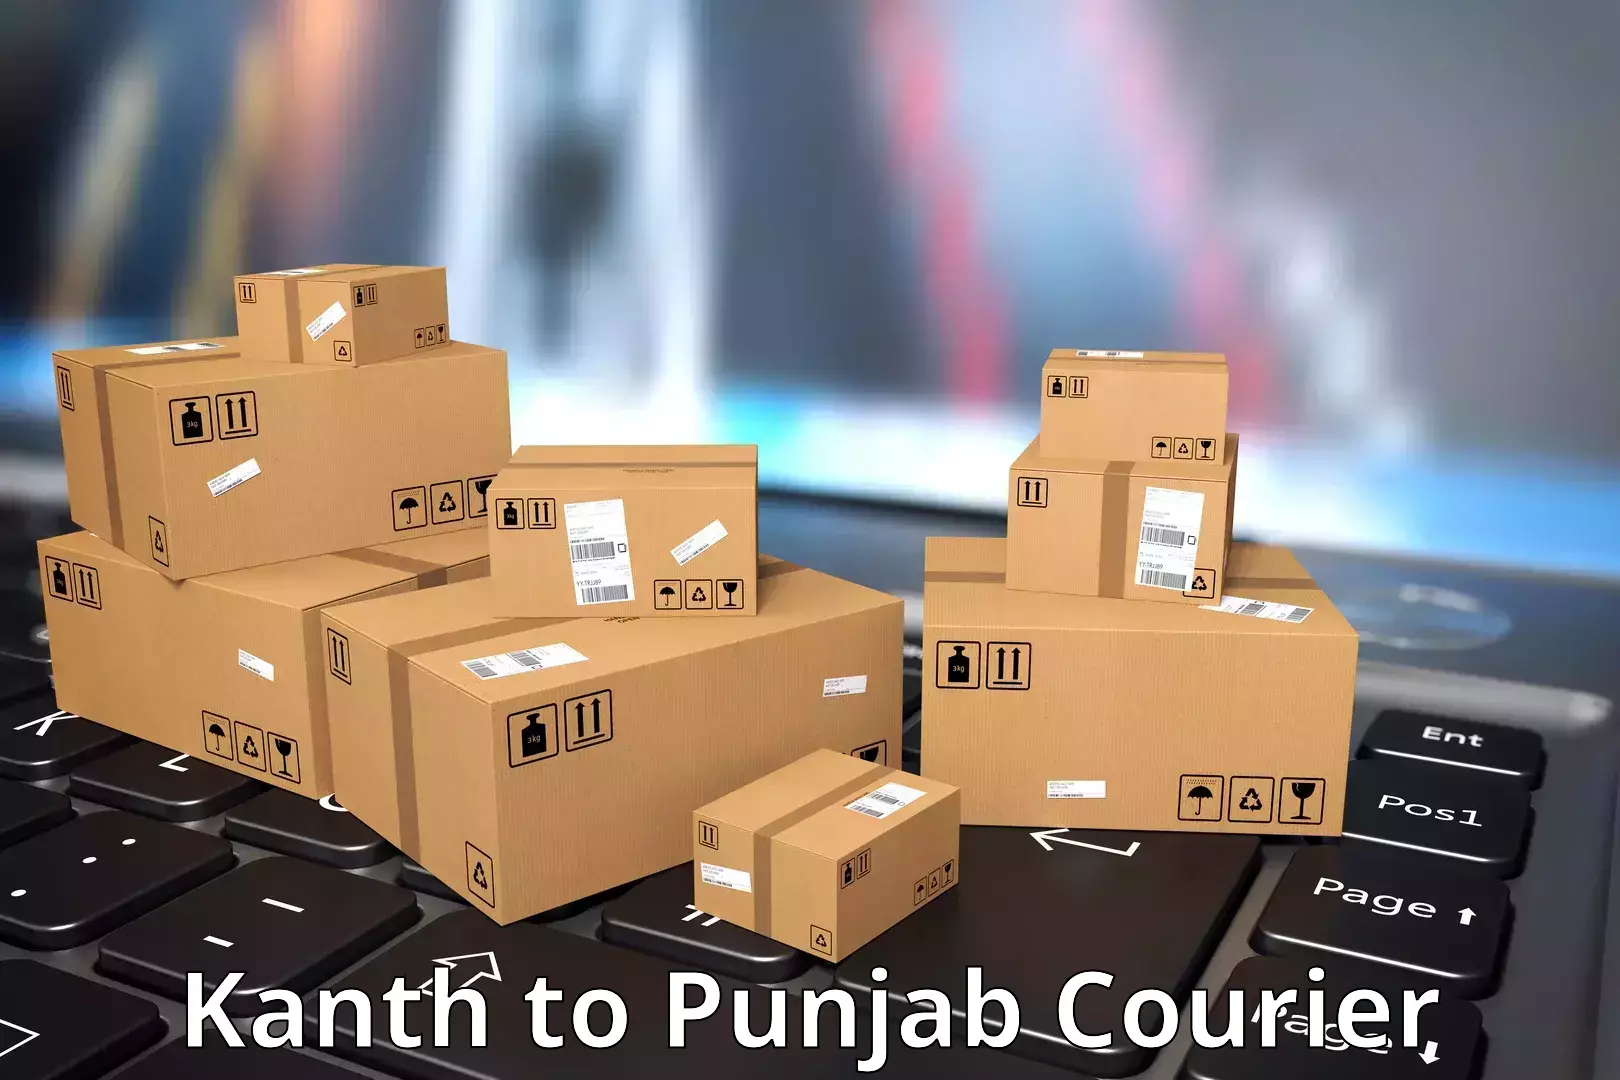 Modern delivery methods Kanth to Punjab